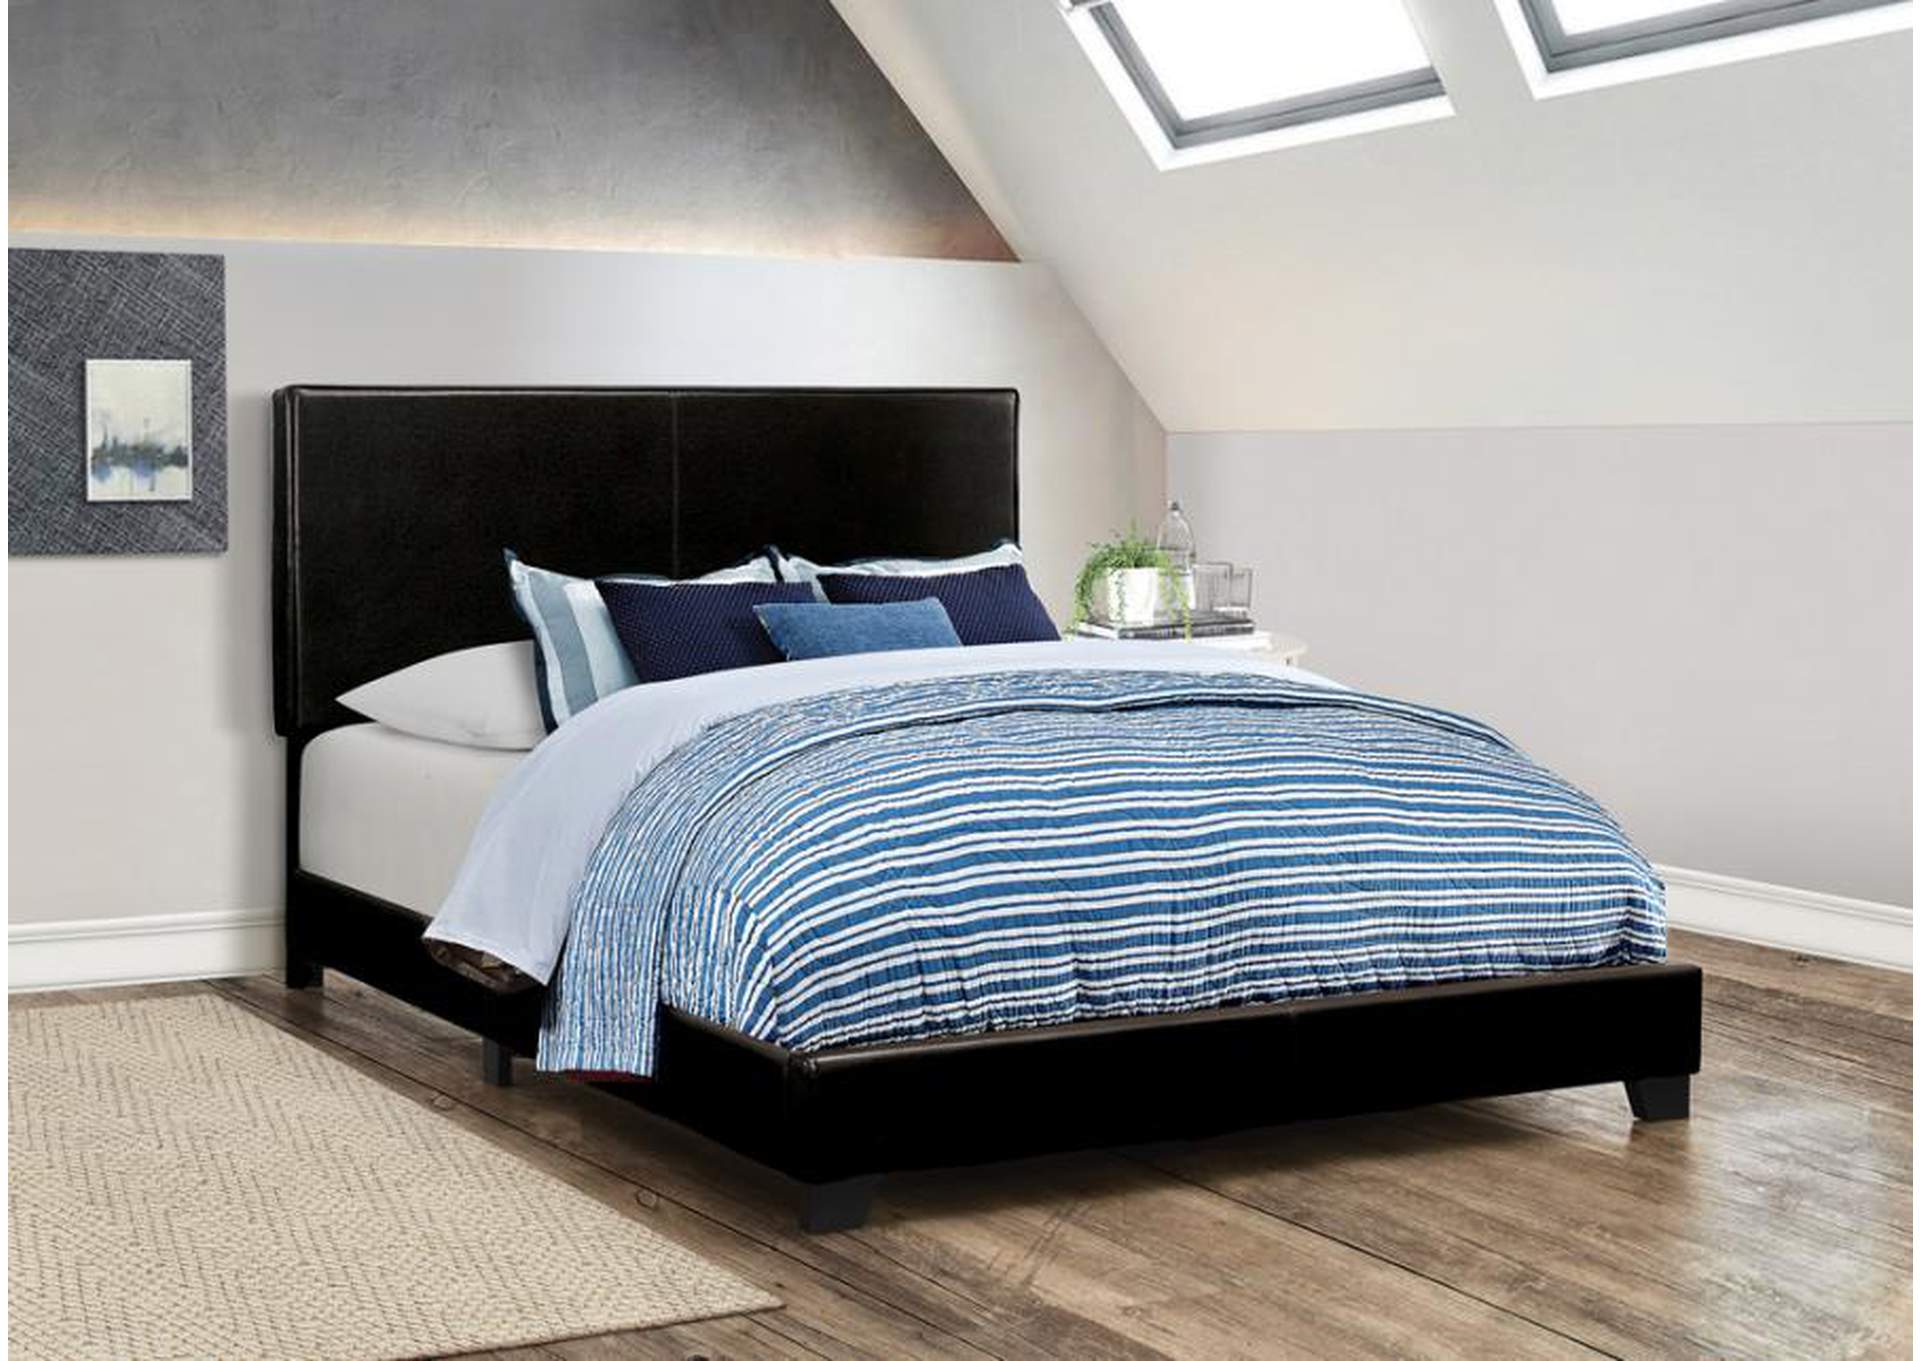 Dorian Upholstered California King Bed Black,Coaster Furniture